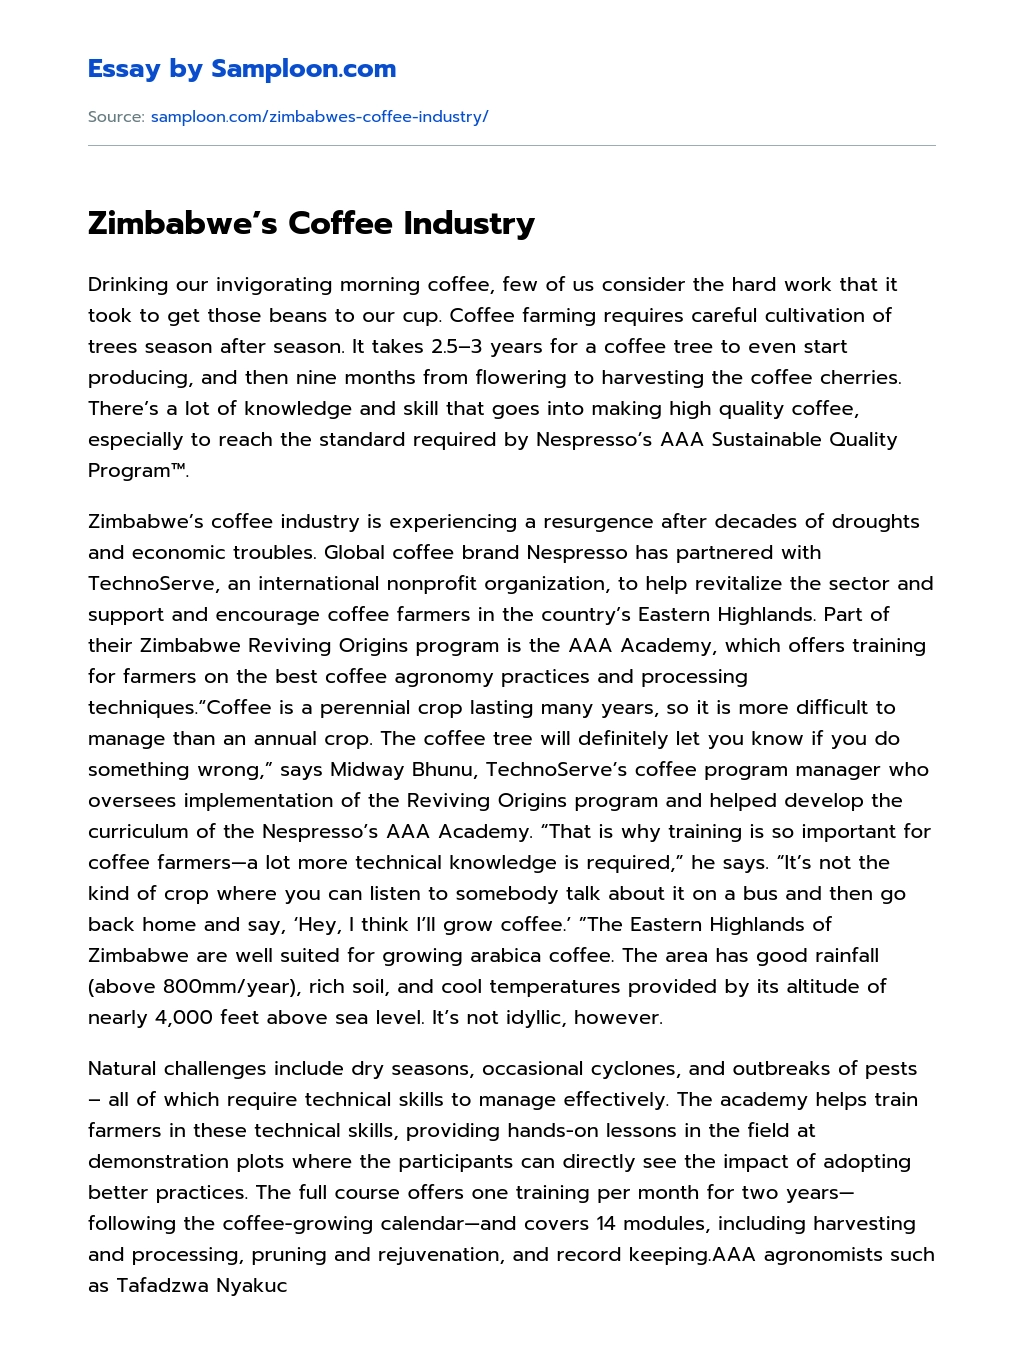 Zimbabwe’s Coffee Industry essay